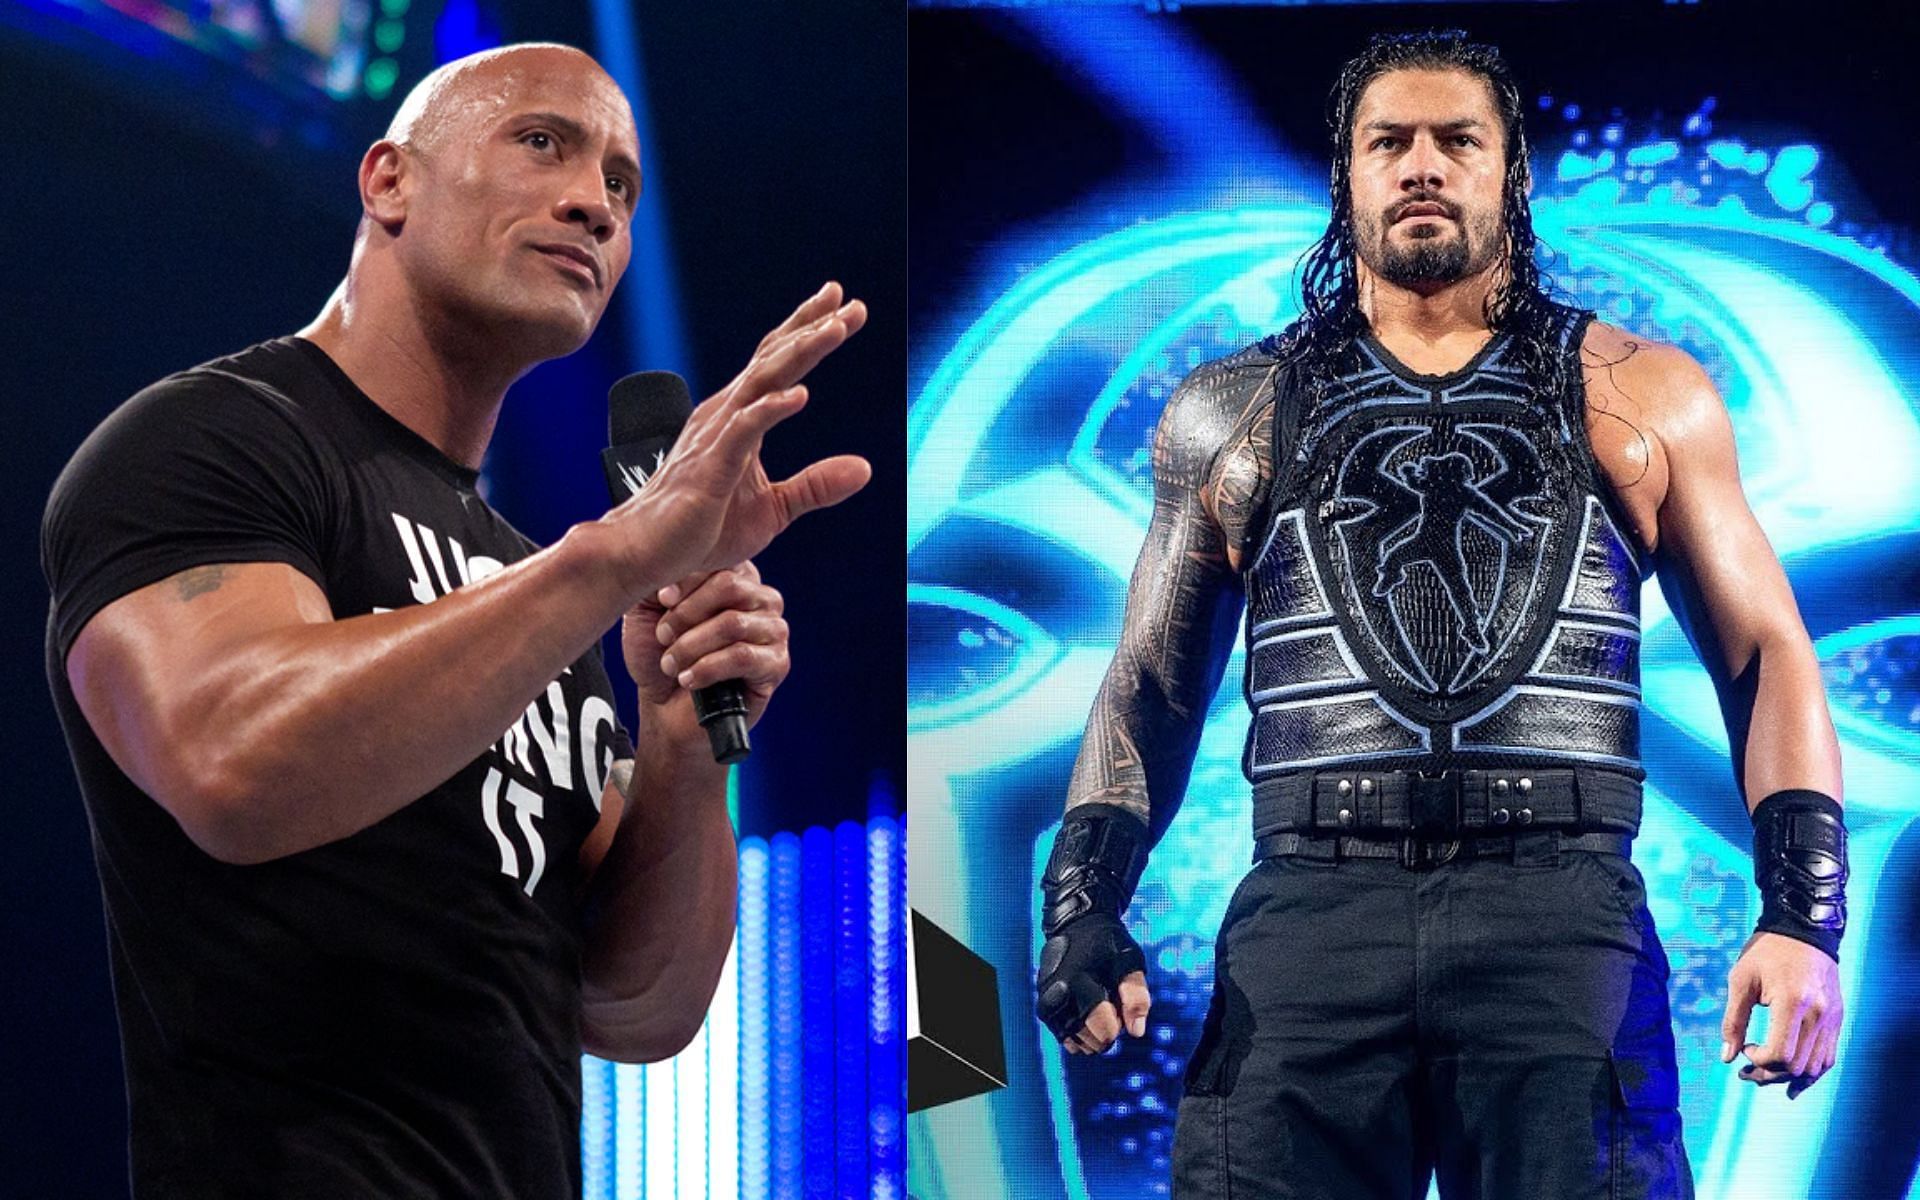 Roman Reigns vs. The Rock - Dwayne Johnson's opinion on the WWE match